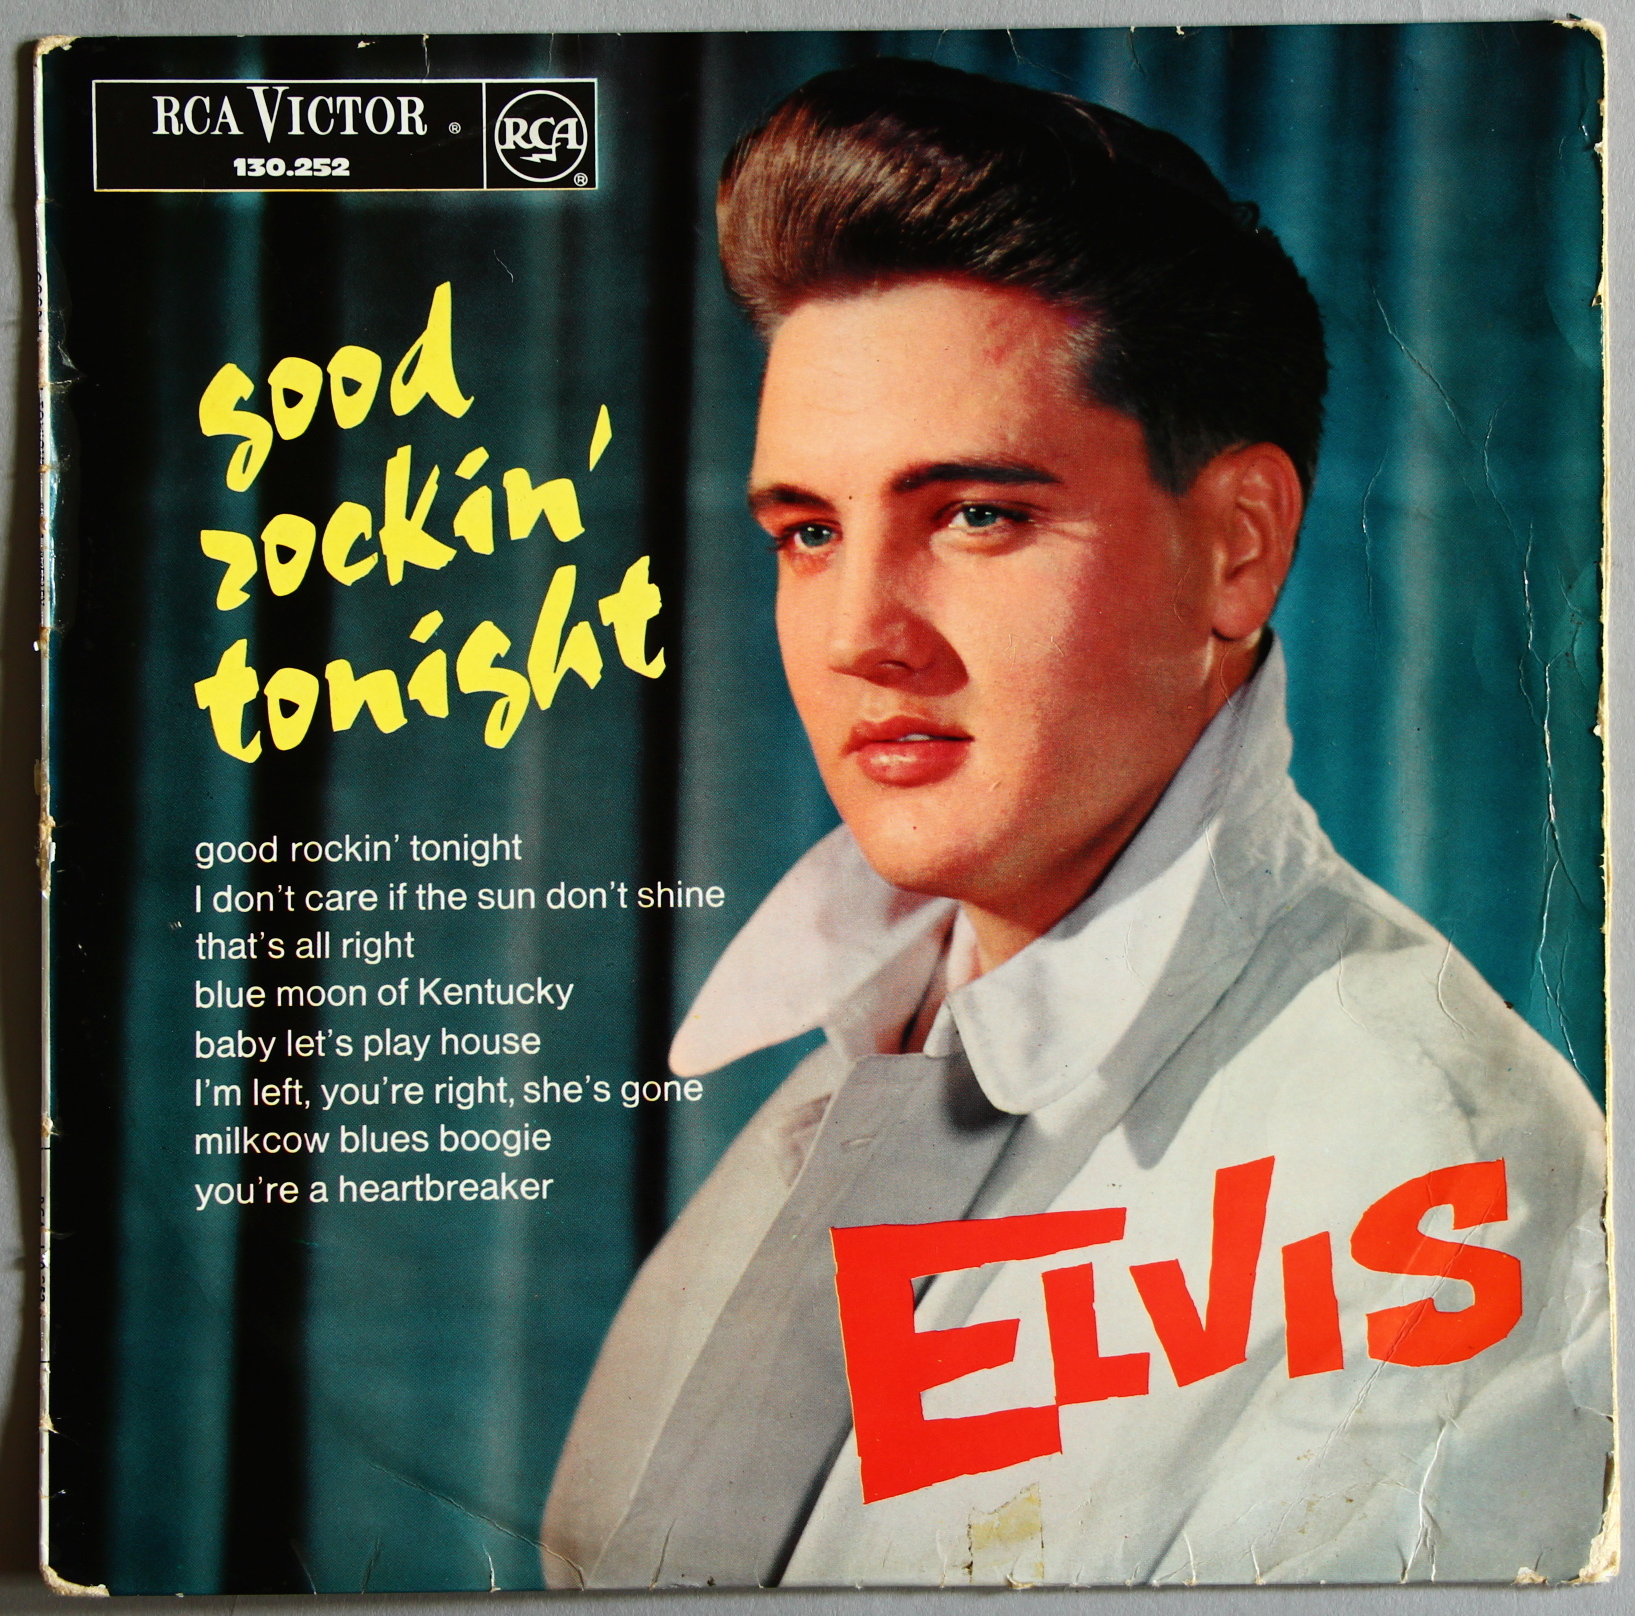 Elvis Presley Rare French 10 inch vinyl record "Good Rockin Tonight" original pressing 130.252. - Image 6 of 6